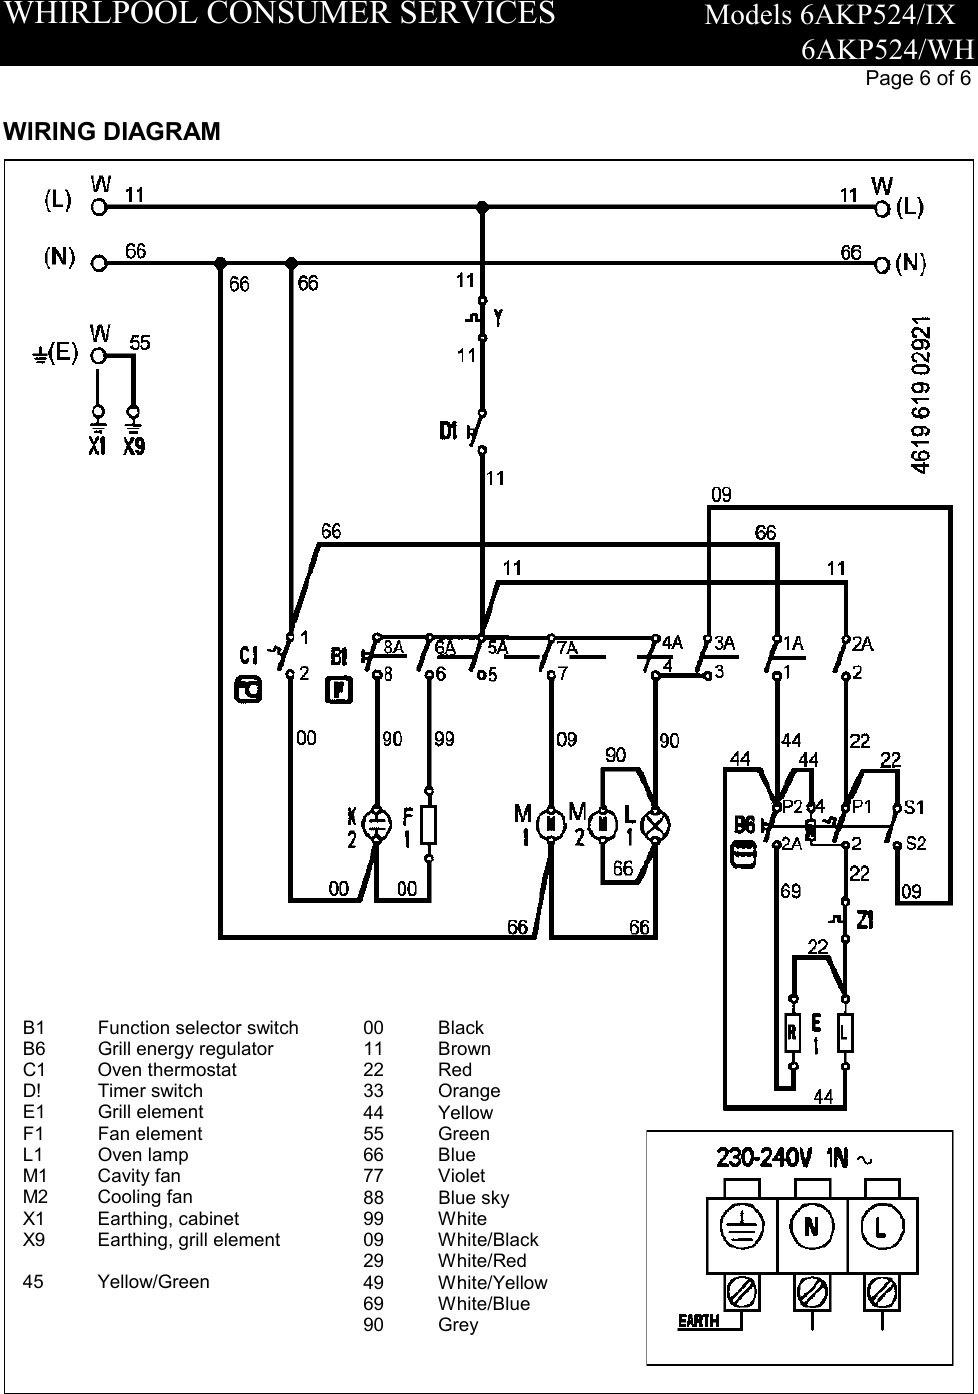 Page 6 of 6 - Whirlpool Whirlpool-Whirlpool-Oven-6Akp524-Ix-Users-Manual SM5530